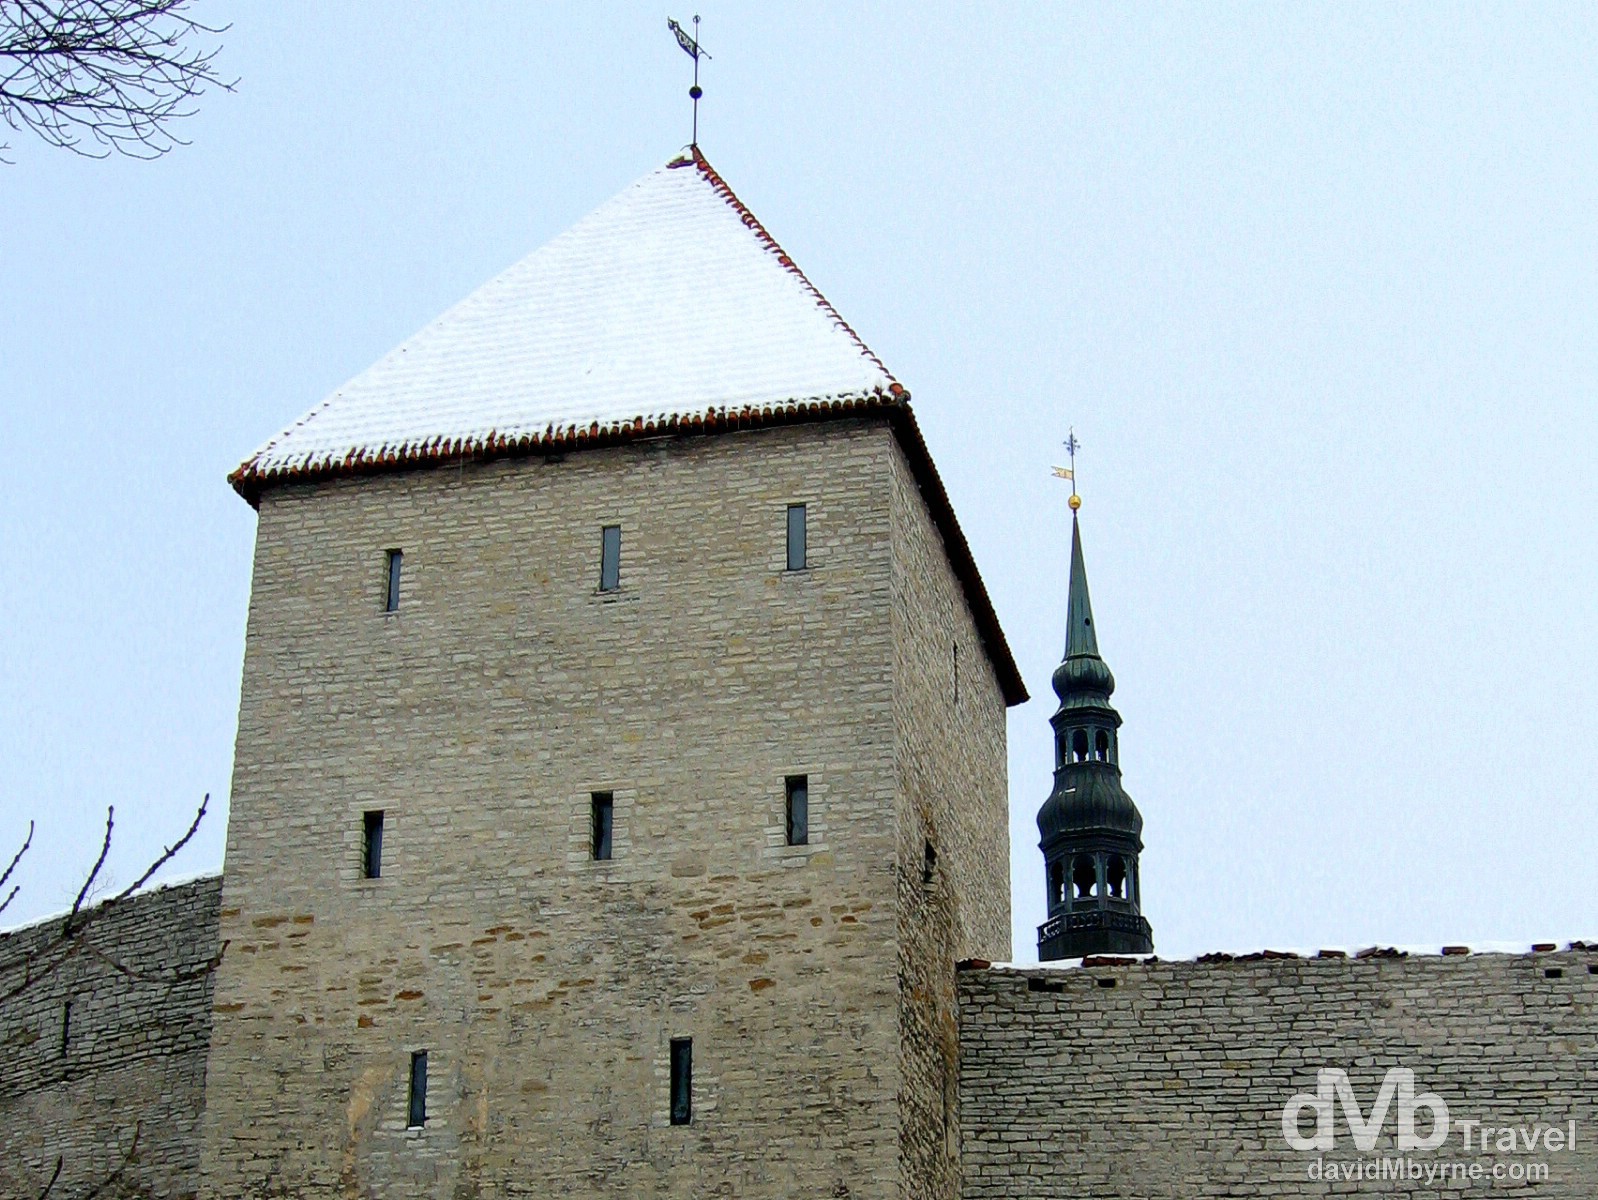 Walls, towers & spires. Old Town, Tallinn, Estonia. March 2, 2006.